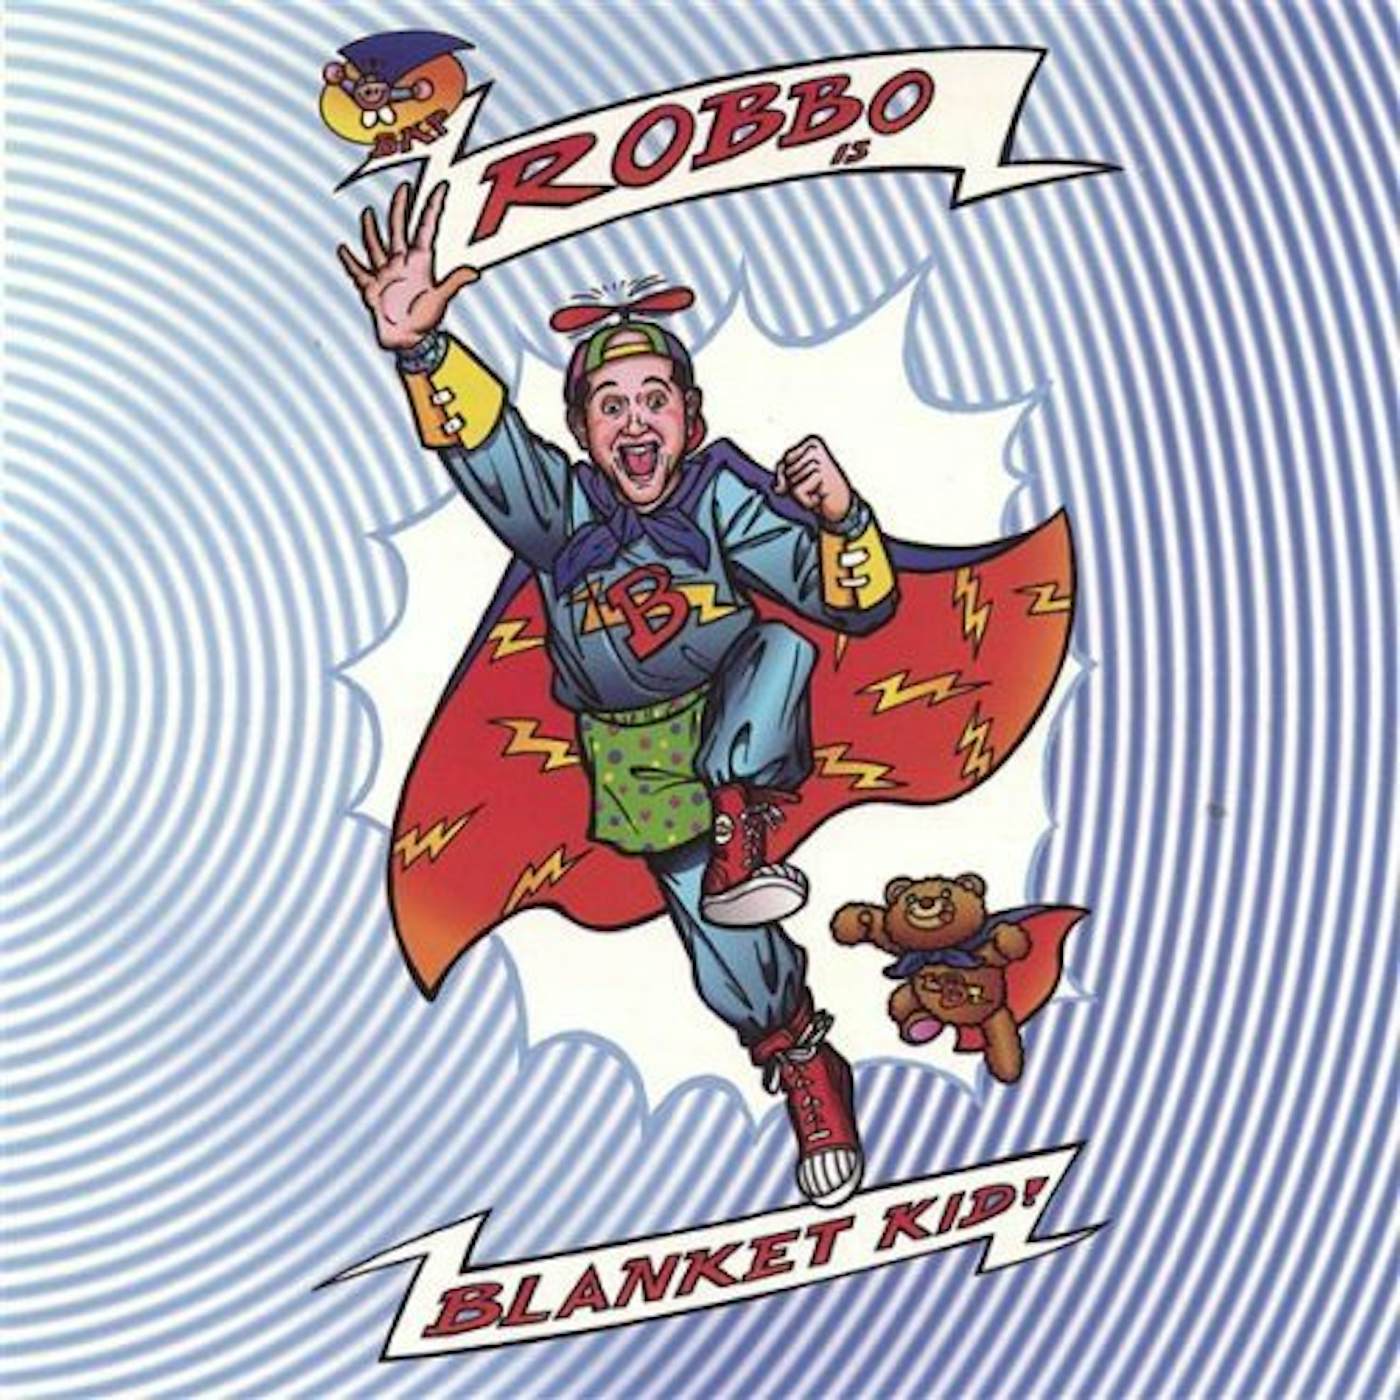 Robbo BLANKET KID CD